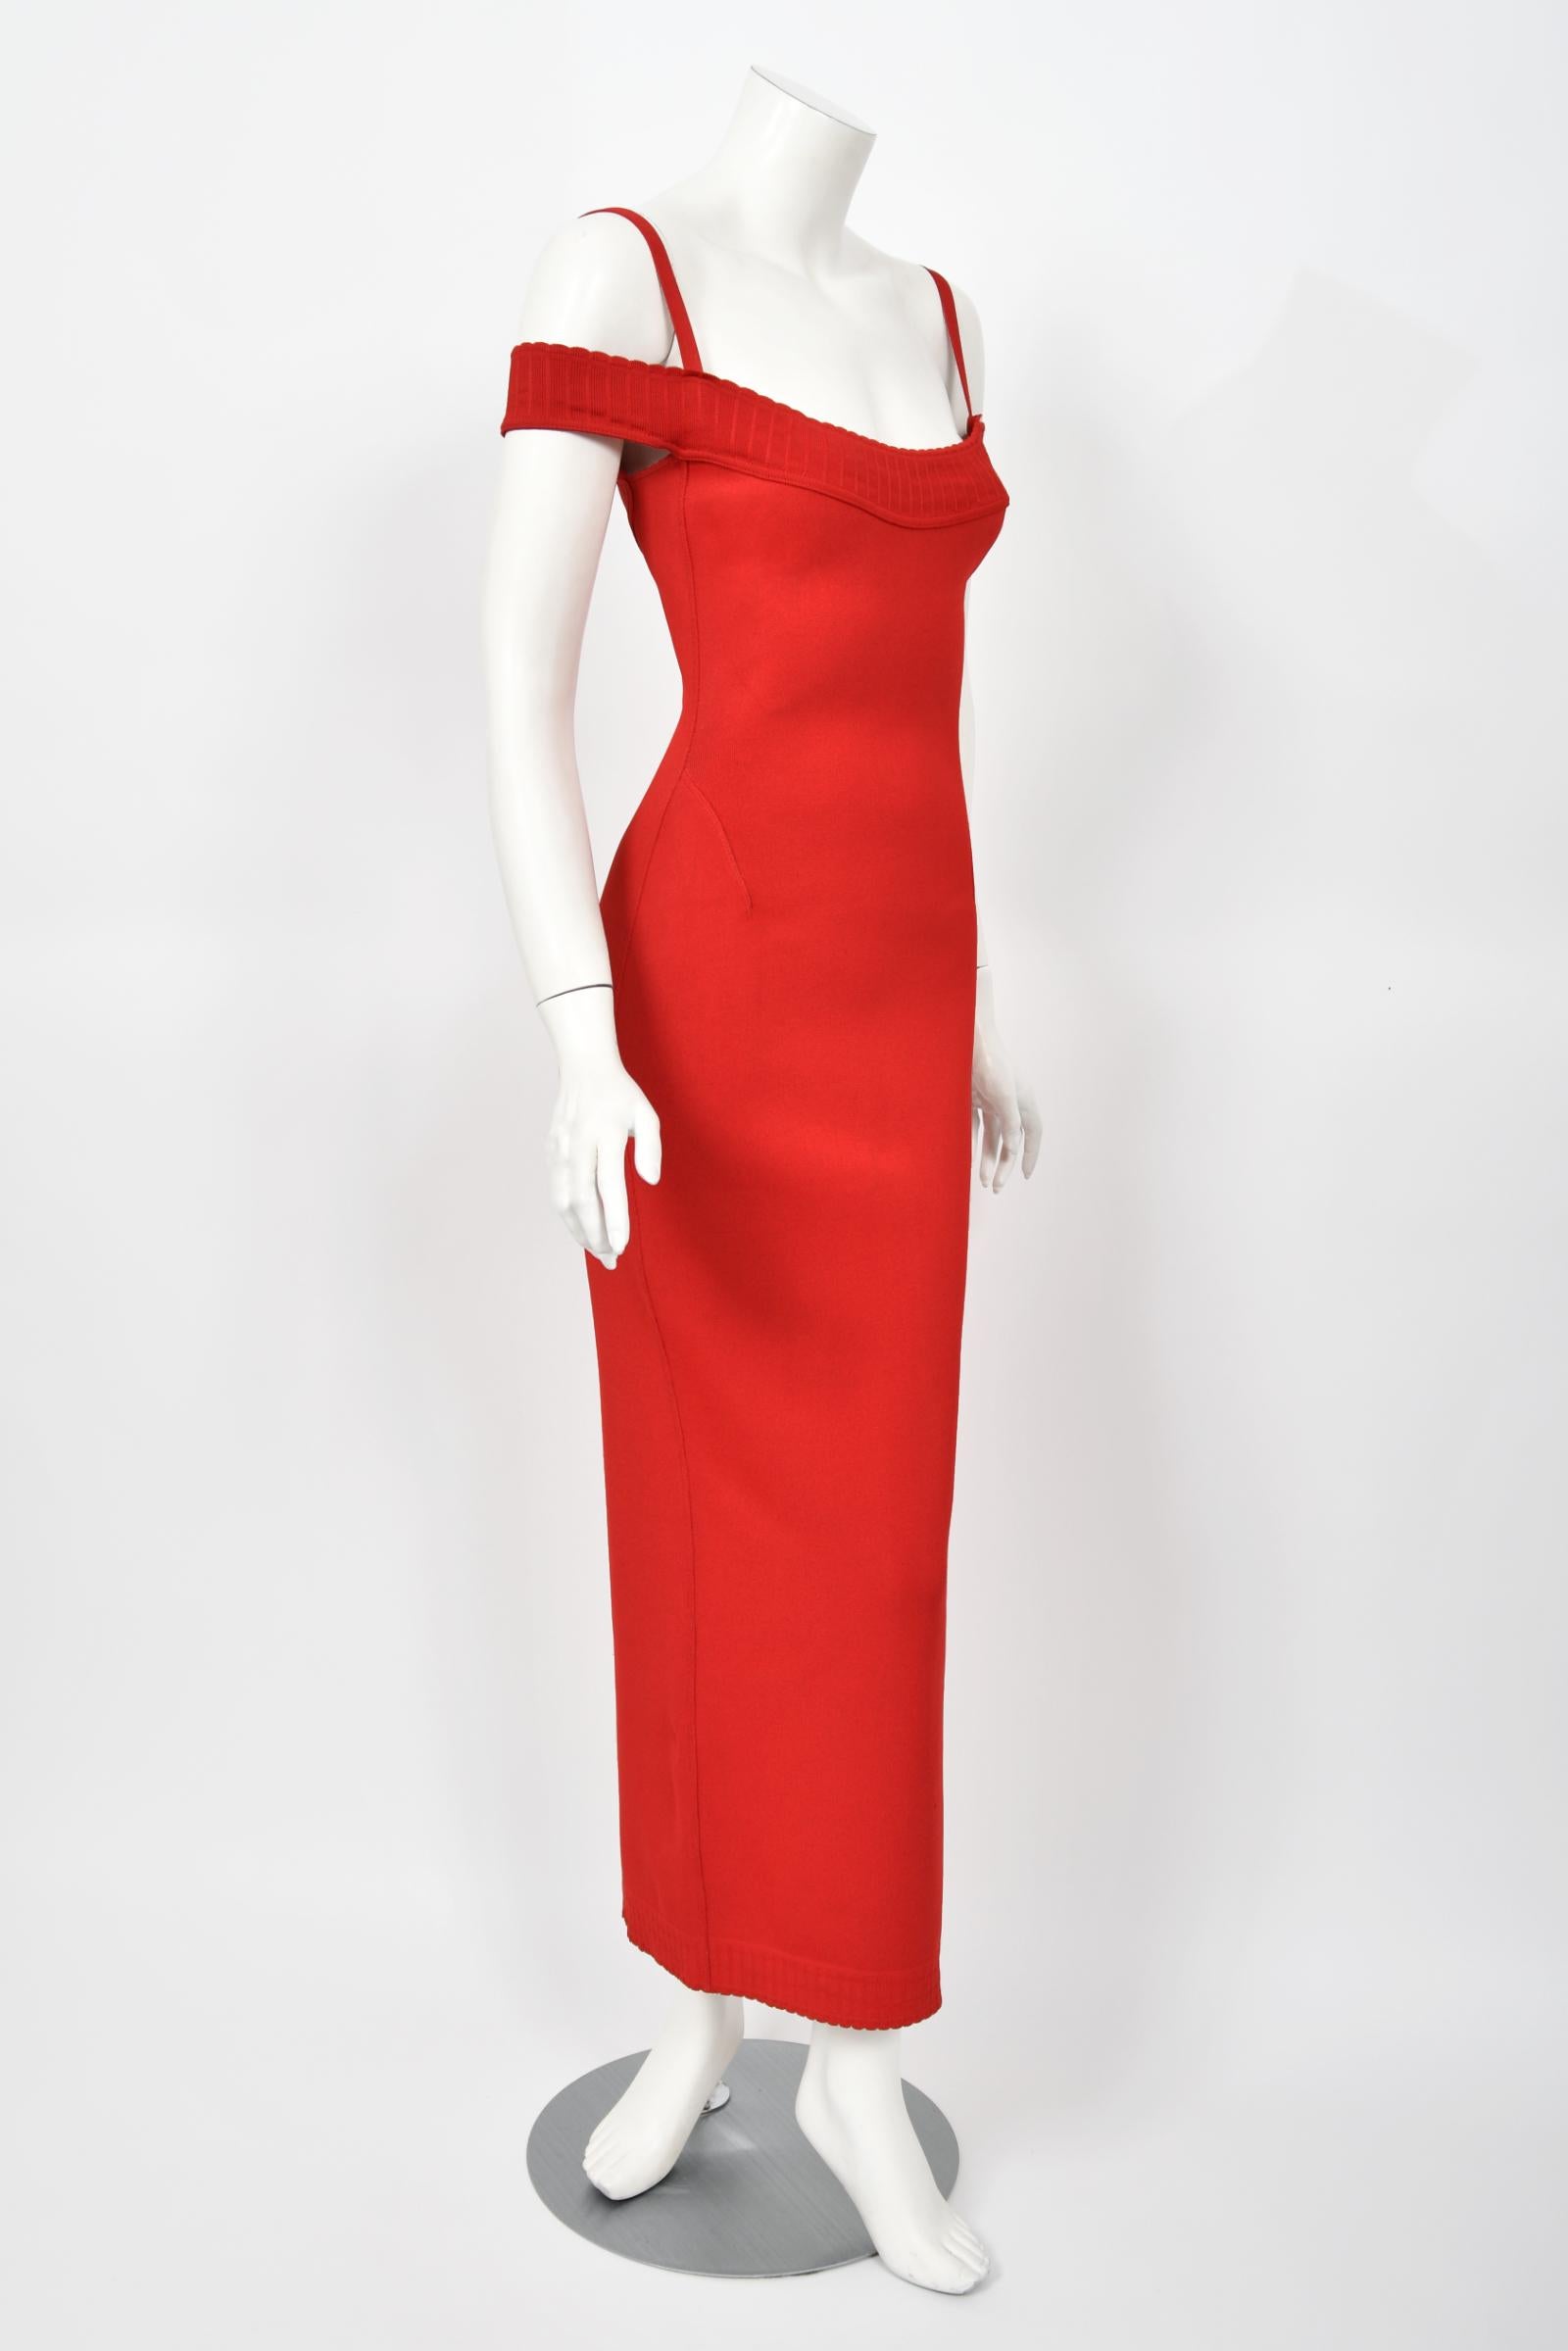 1992 Azzedine Alaia Red Stretch Knit Cold-Shoulder Bodycon Hourglass Maxi Dress 1